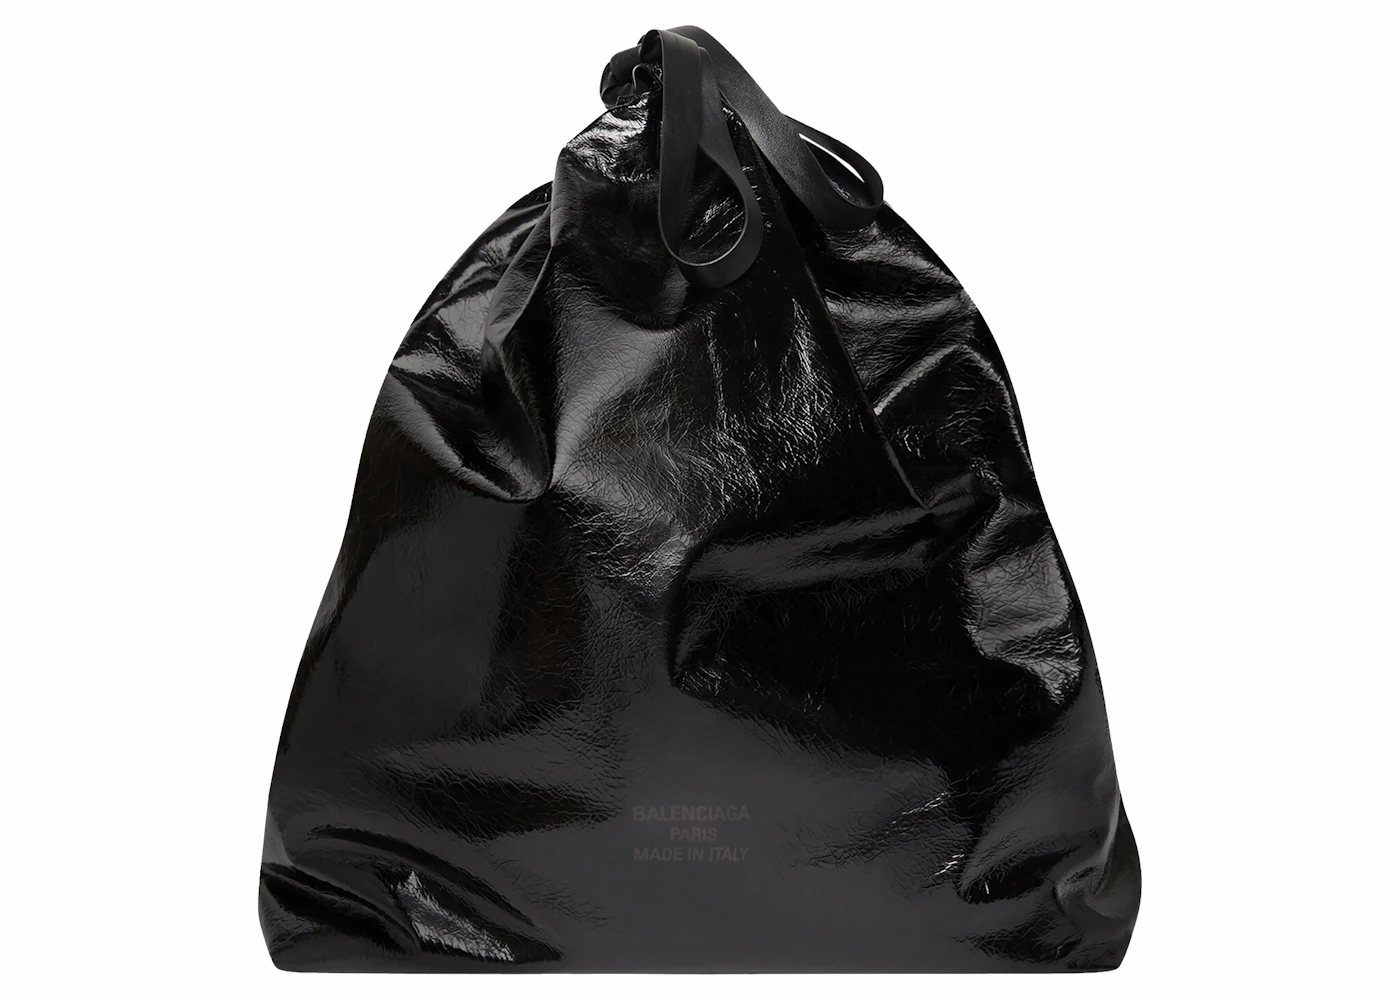 Balenciaga Garbage Bag A Fashion Statement in Disguise